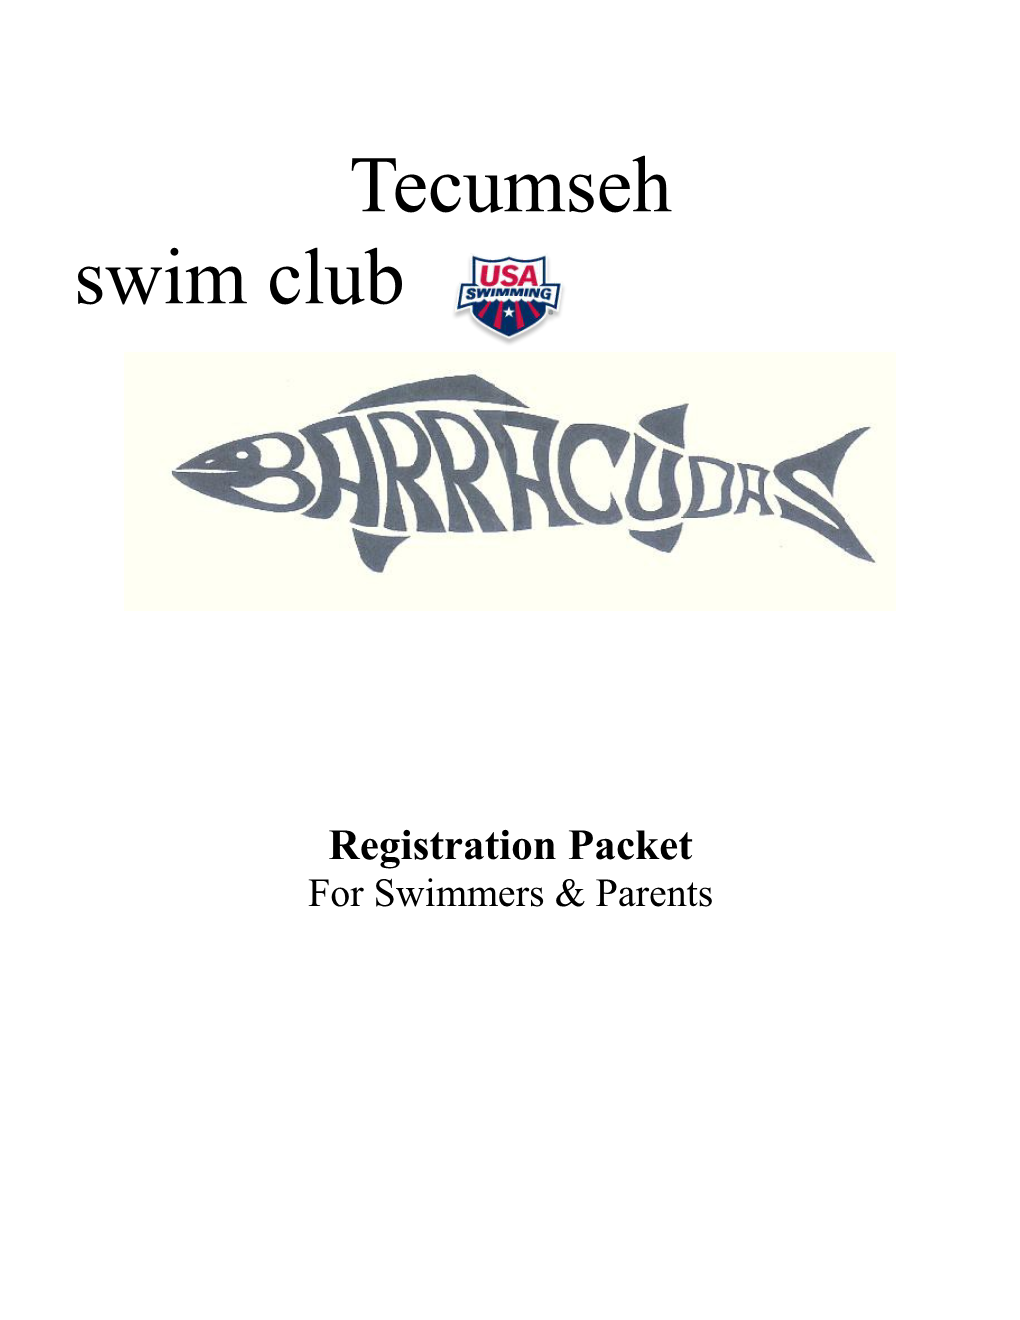 Tecumseh Swim Club